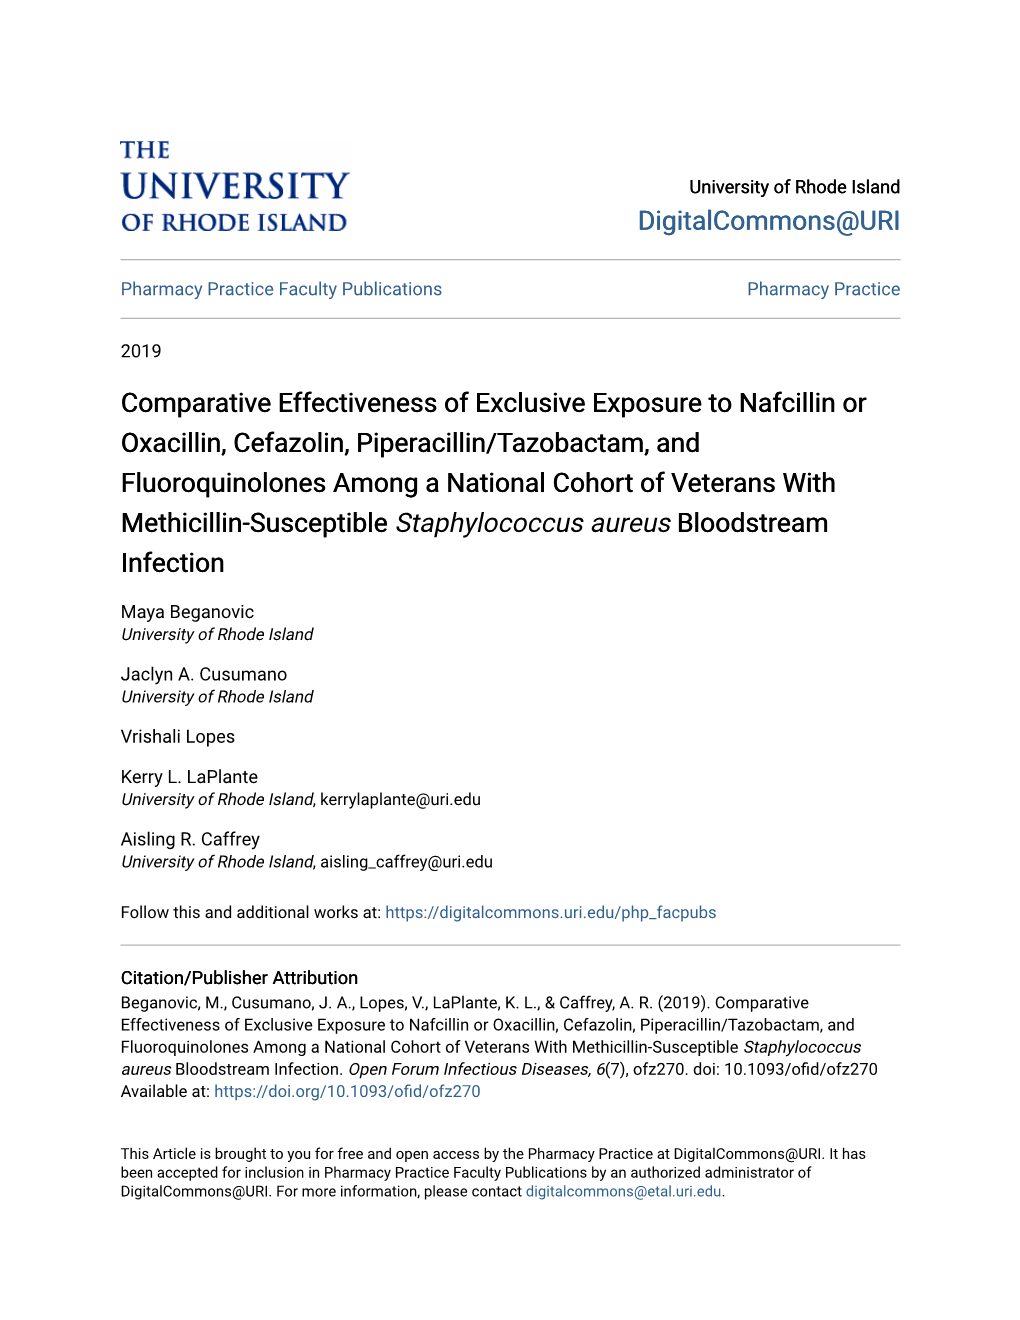 Comparative Effectiveness of Exclusive Exposure to Nafcillin Or